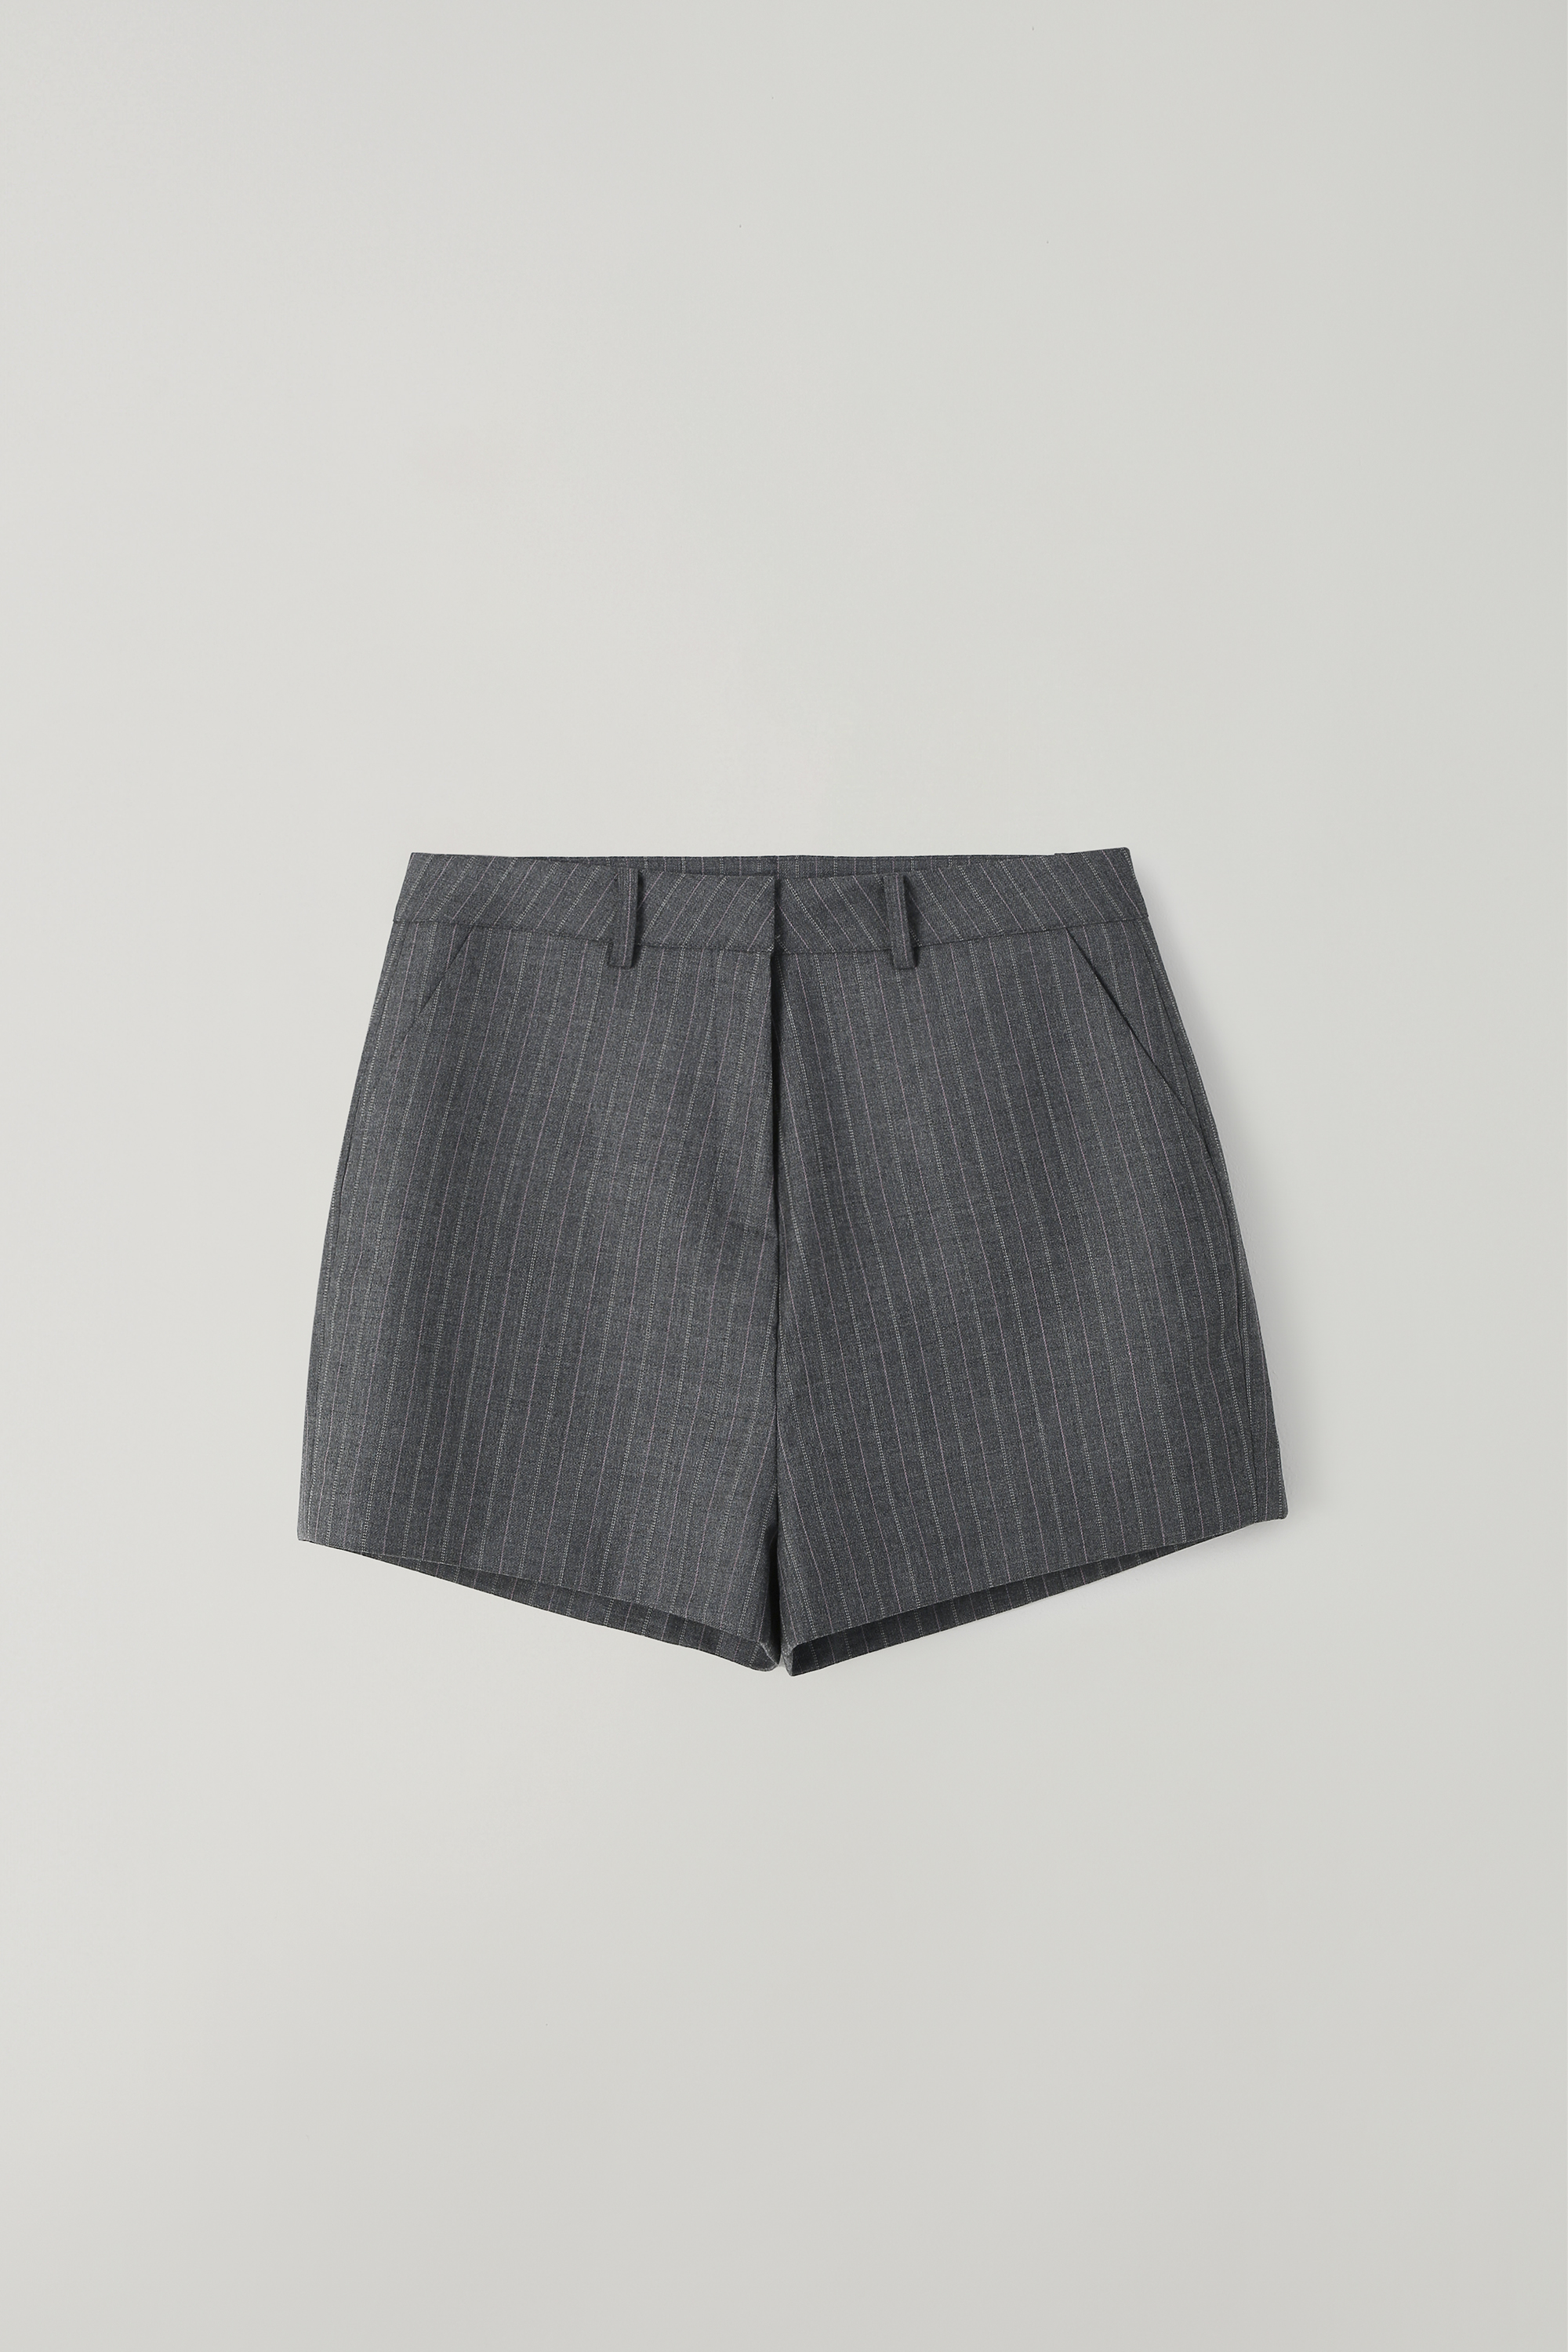 T/T Fin stripe shorts (gray)